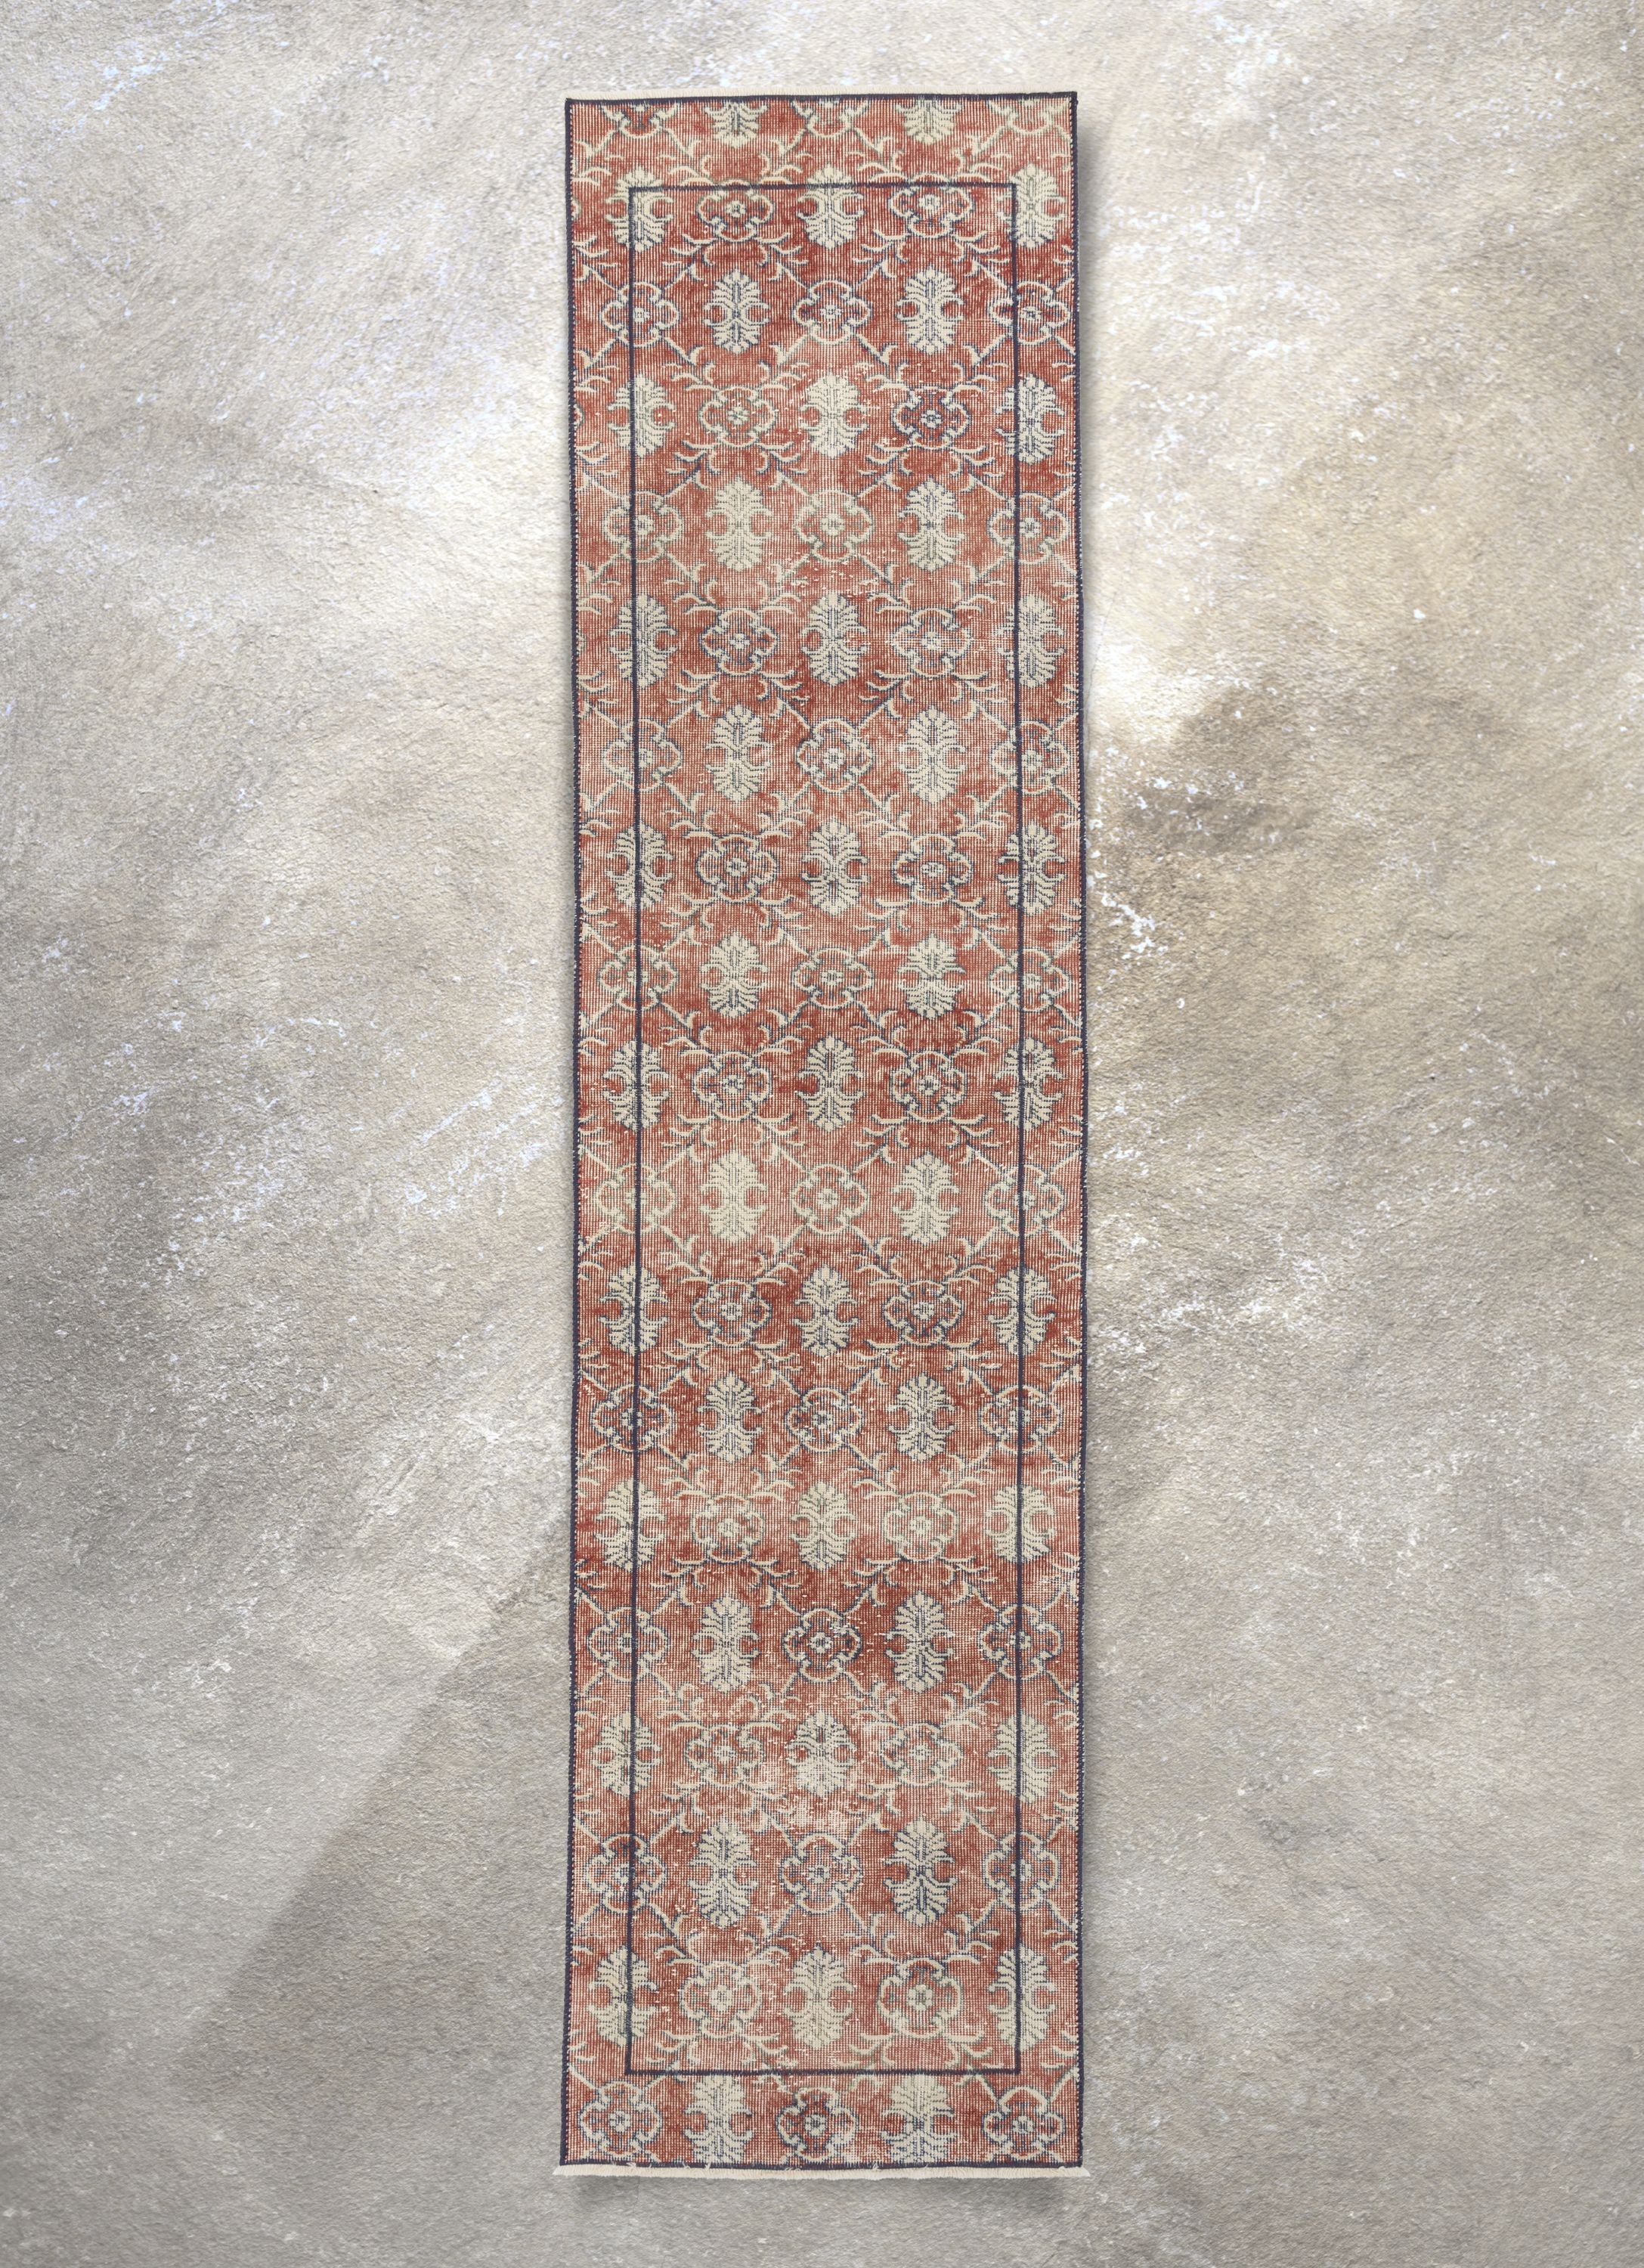 Dize Red & Navy Blue Persian Geometric Lattice Pattern One-of-a-Kind Handmade Wool Area Rug 2'8